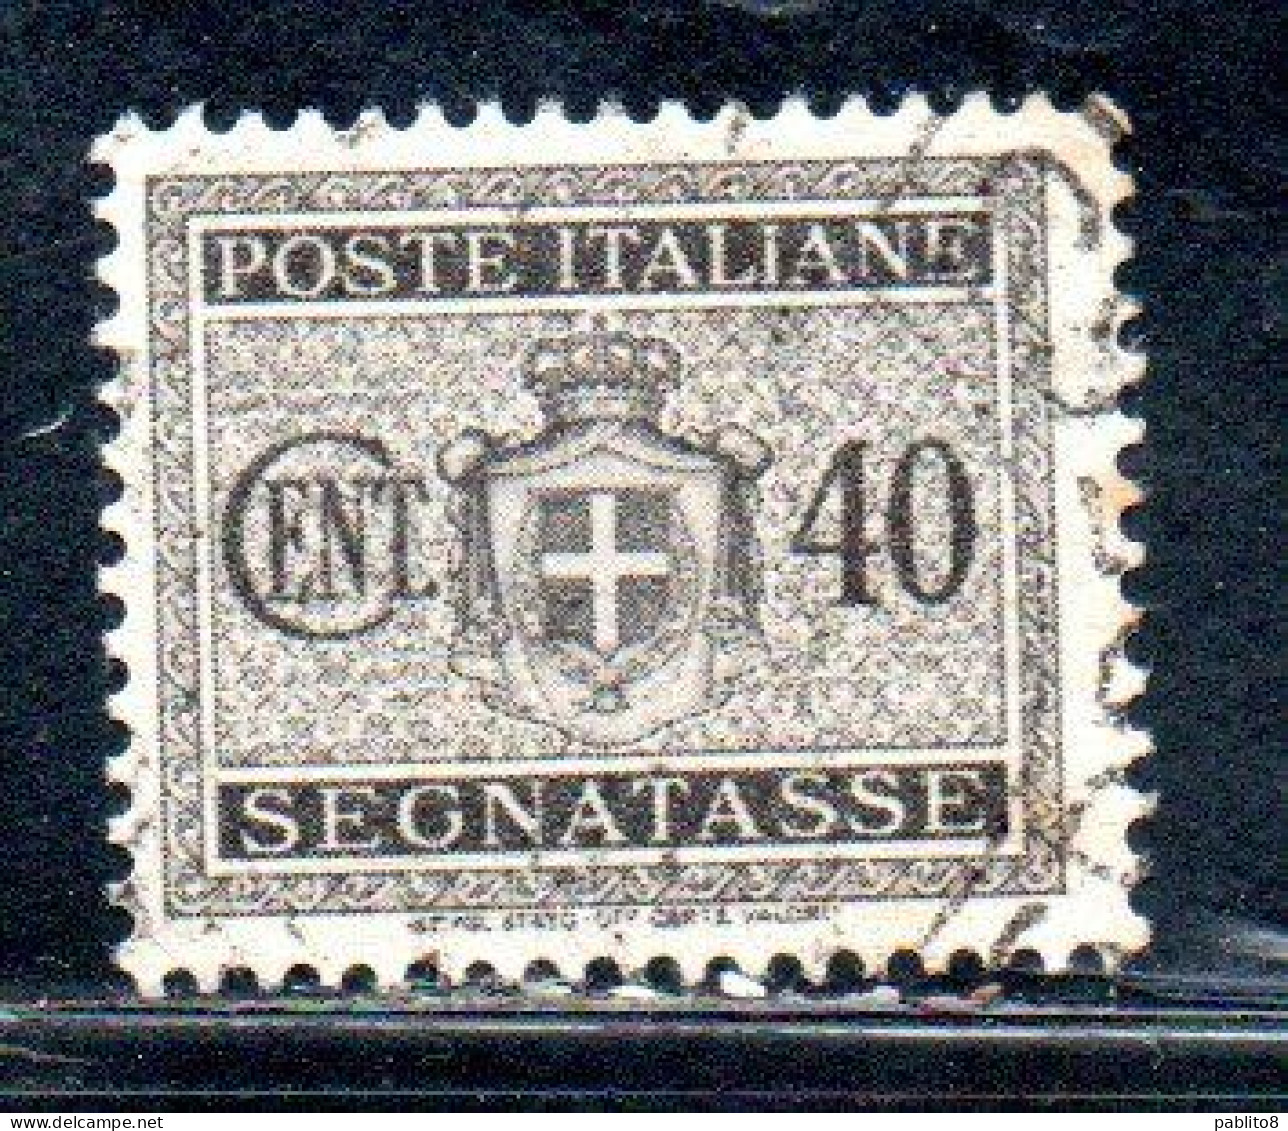 ITALY KINGDOM ITALIA REGNO LUOGOTENENZA 1945 TASSE DUE SEGNATASSE POSTAGE DUE RUOTA WHEEL CENT.40c USATO USED OBLITERE' - Postage Due